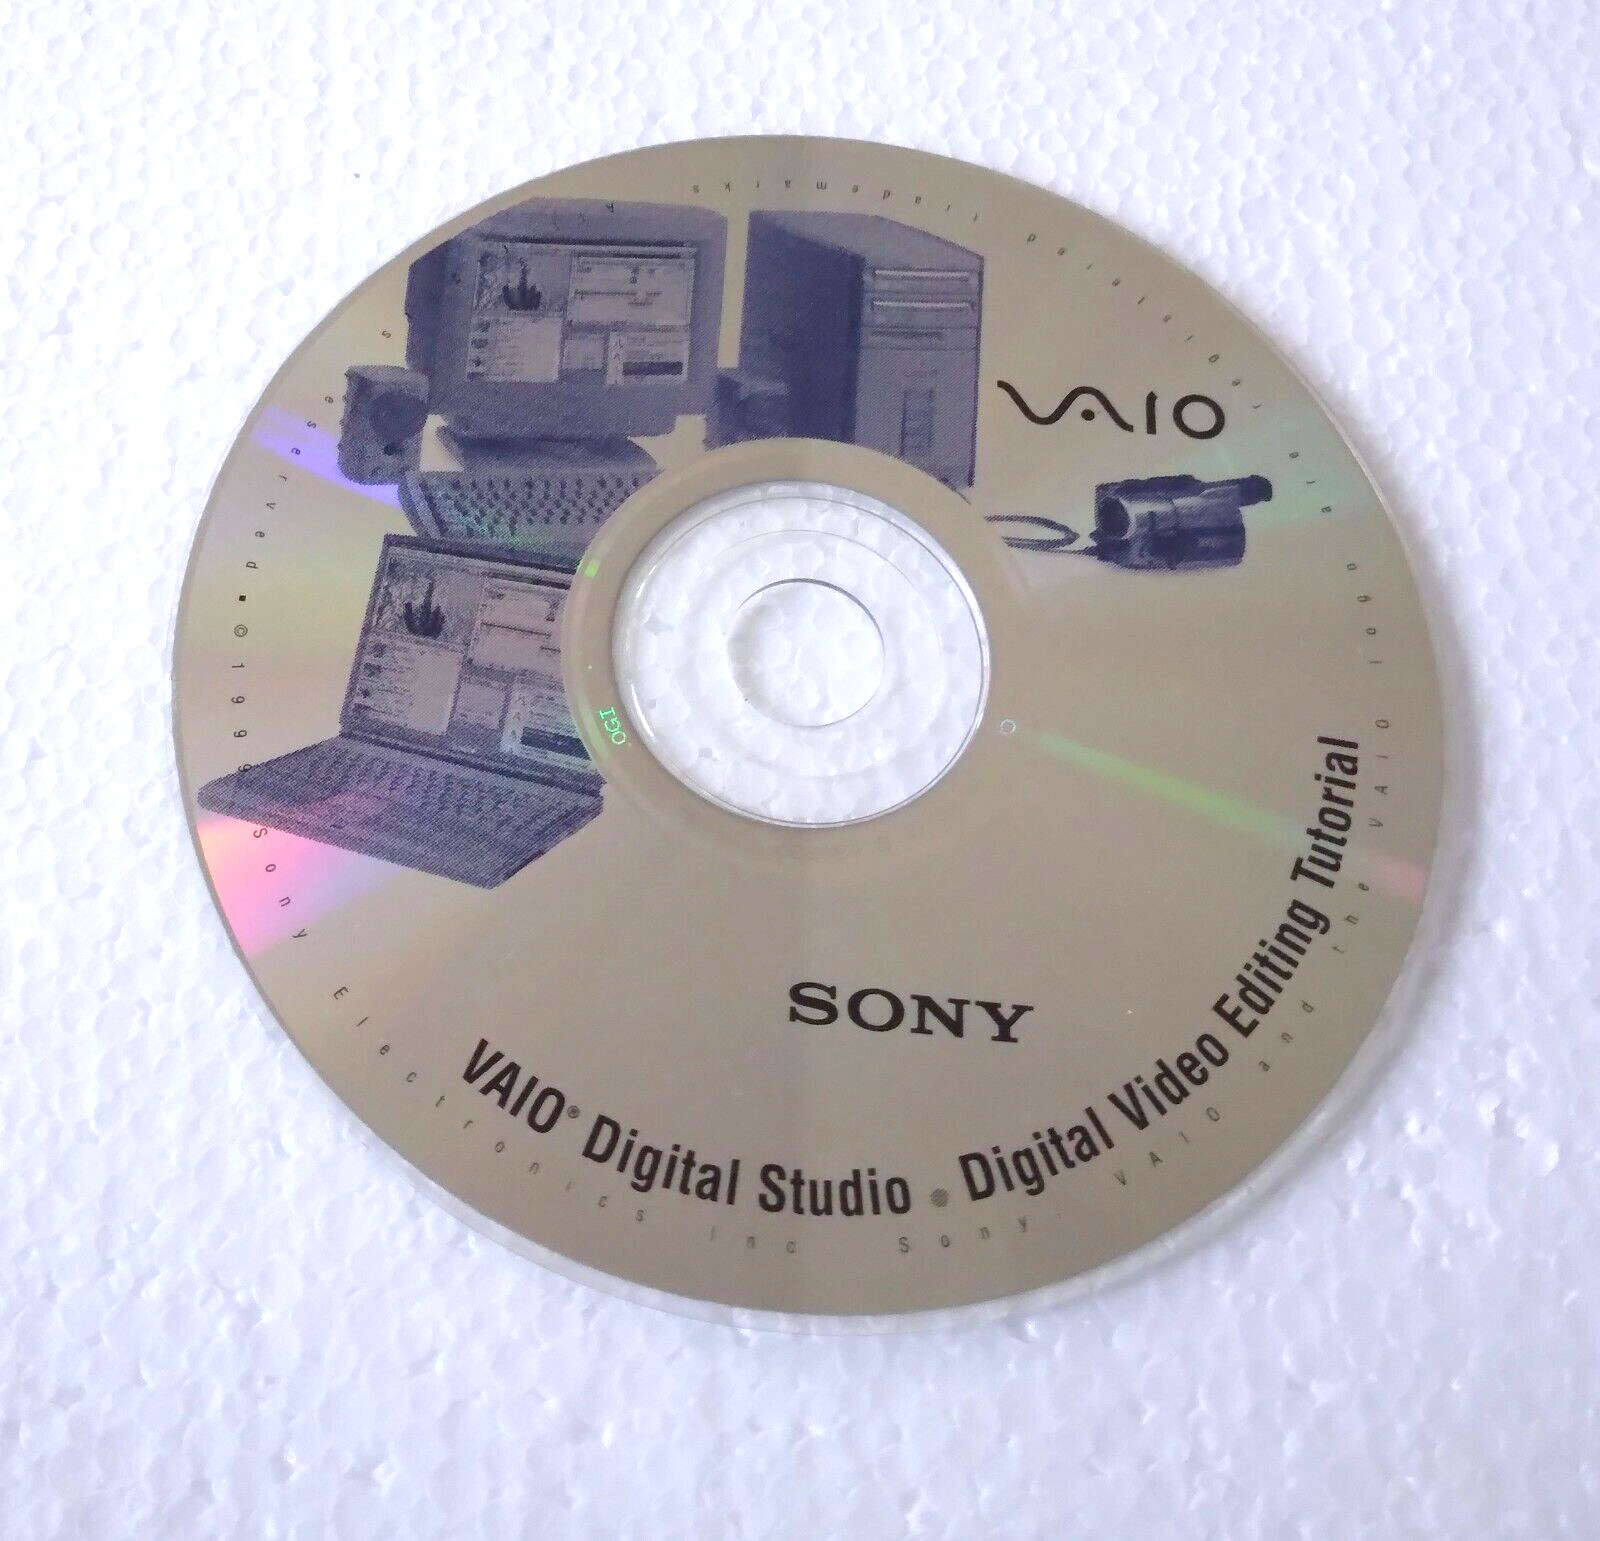 Sony VAIO Digital Studio Video Editing Tutorial CD